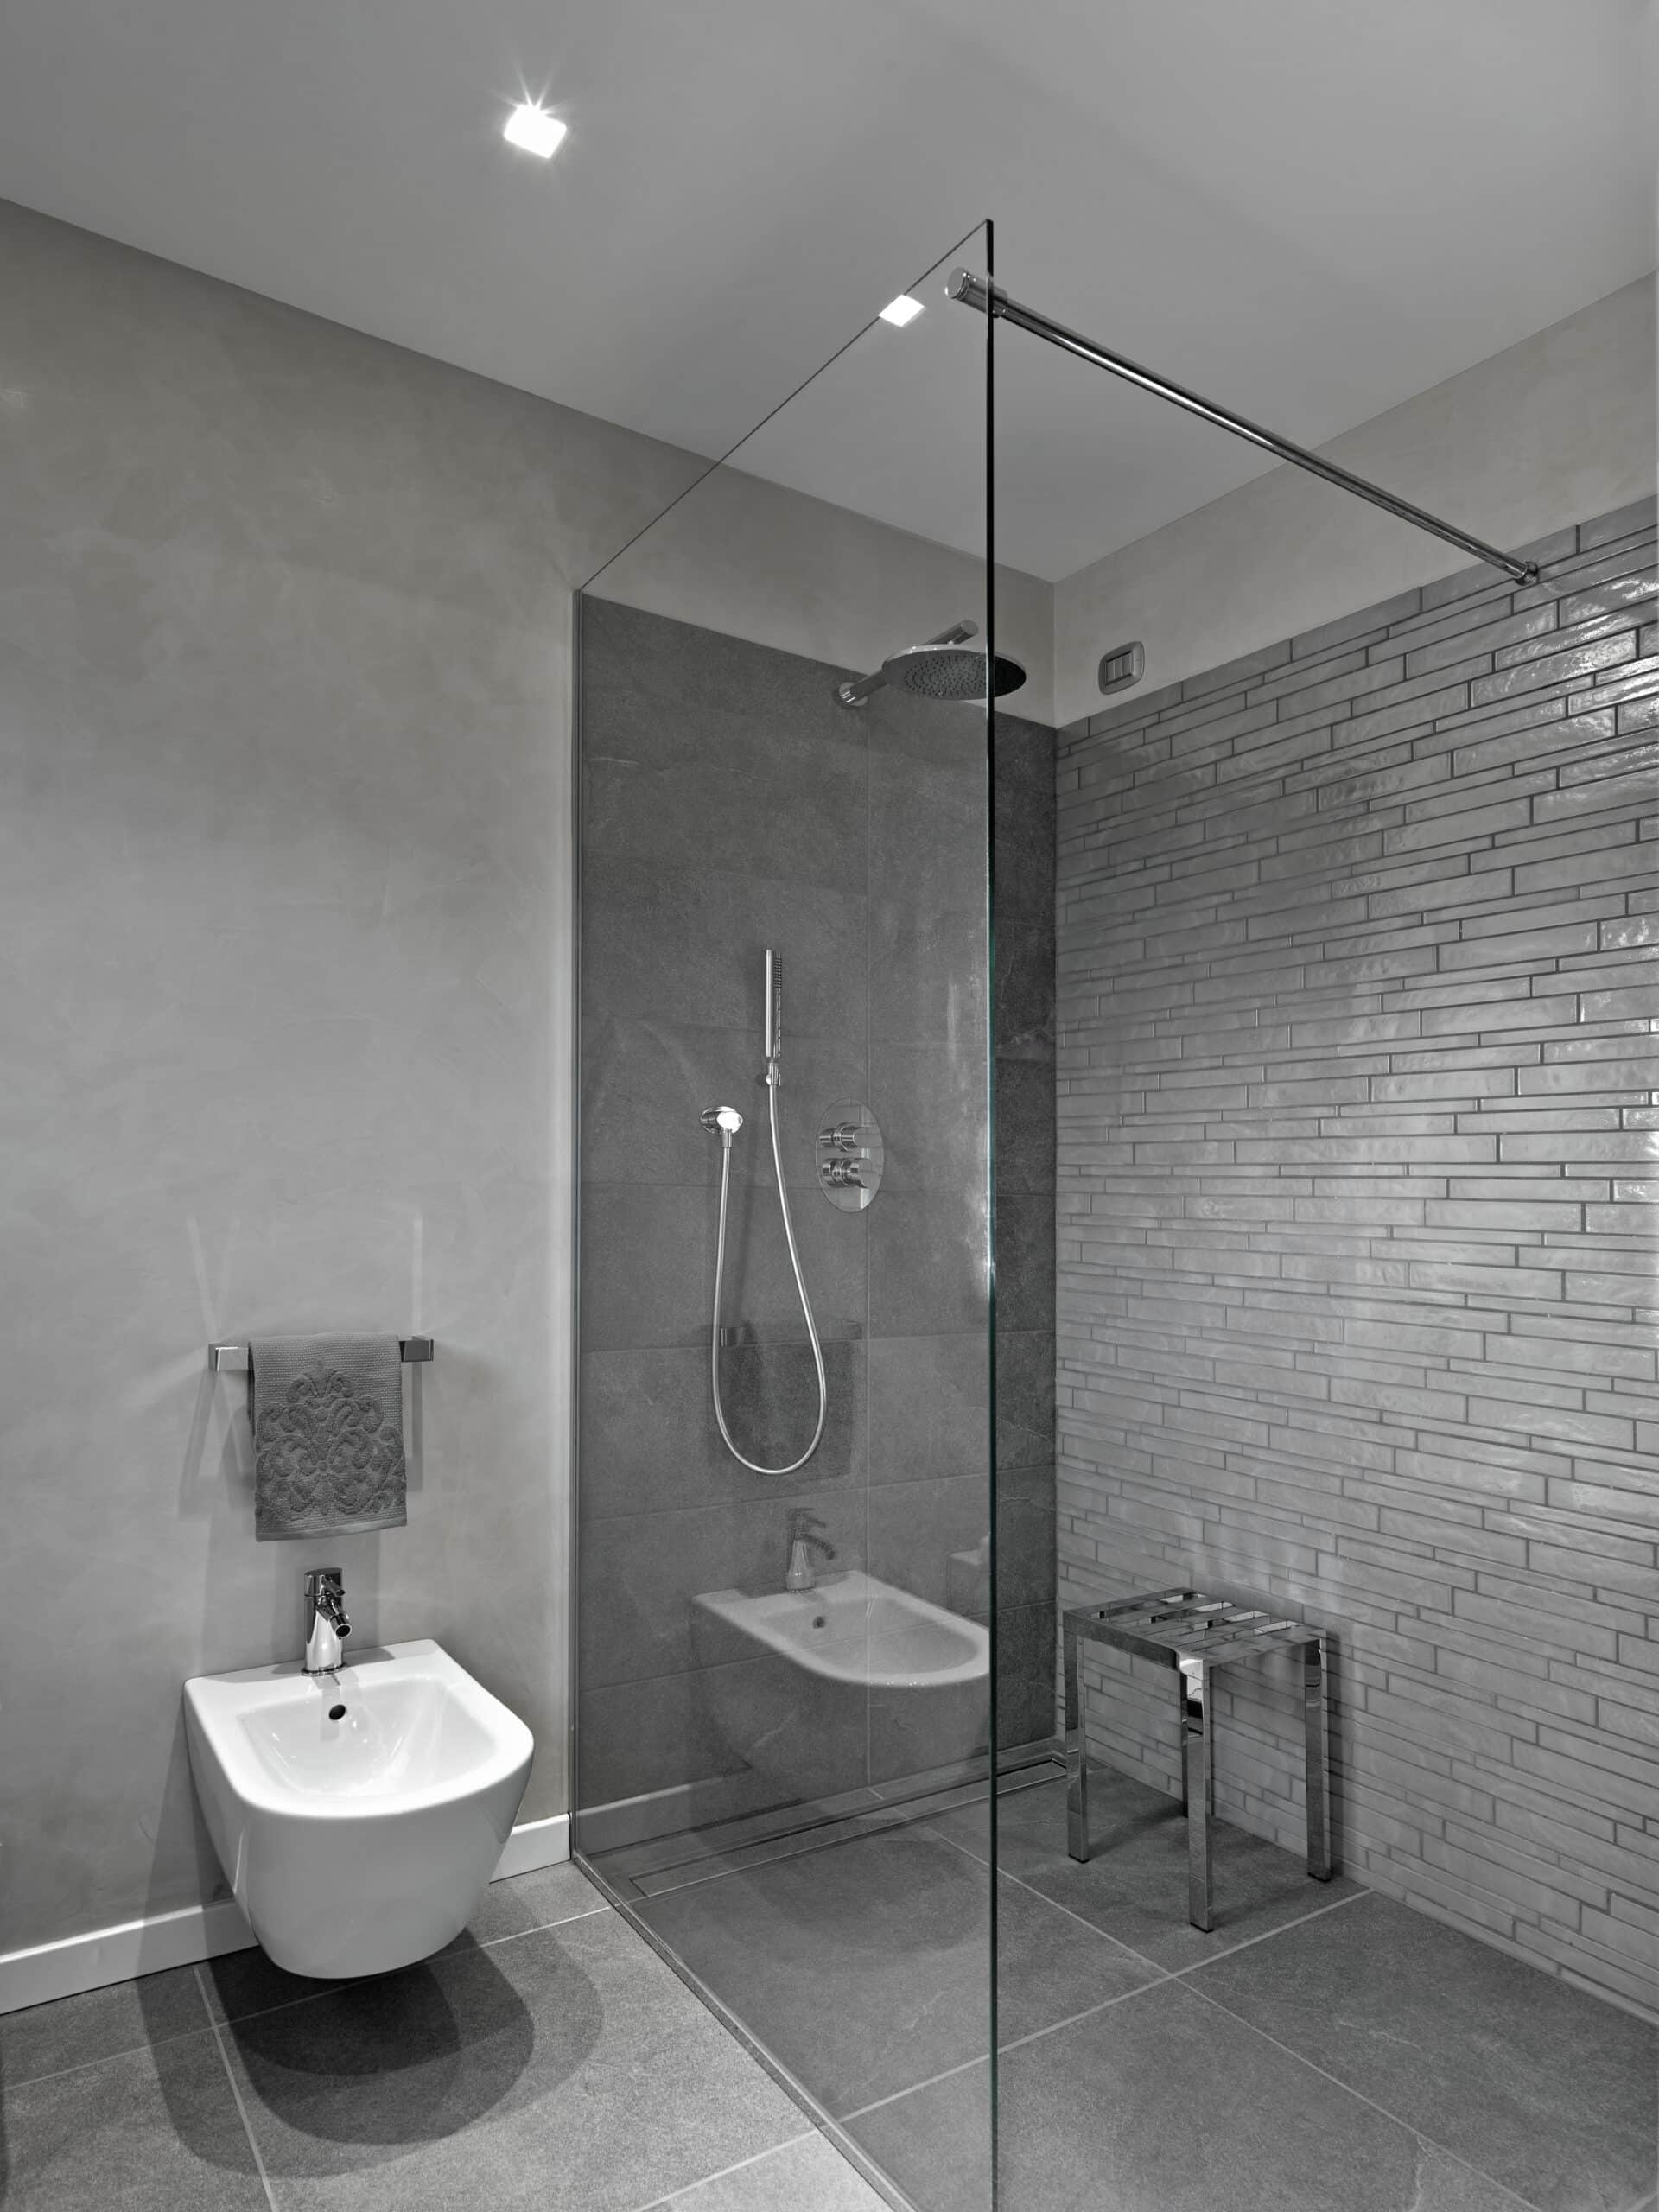 modern bathroom interior with glass shower box 2021 09 01 23 16 15 utc scaled 1